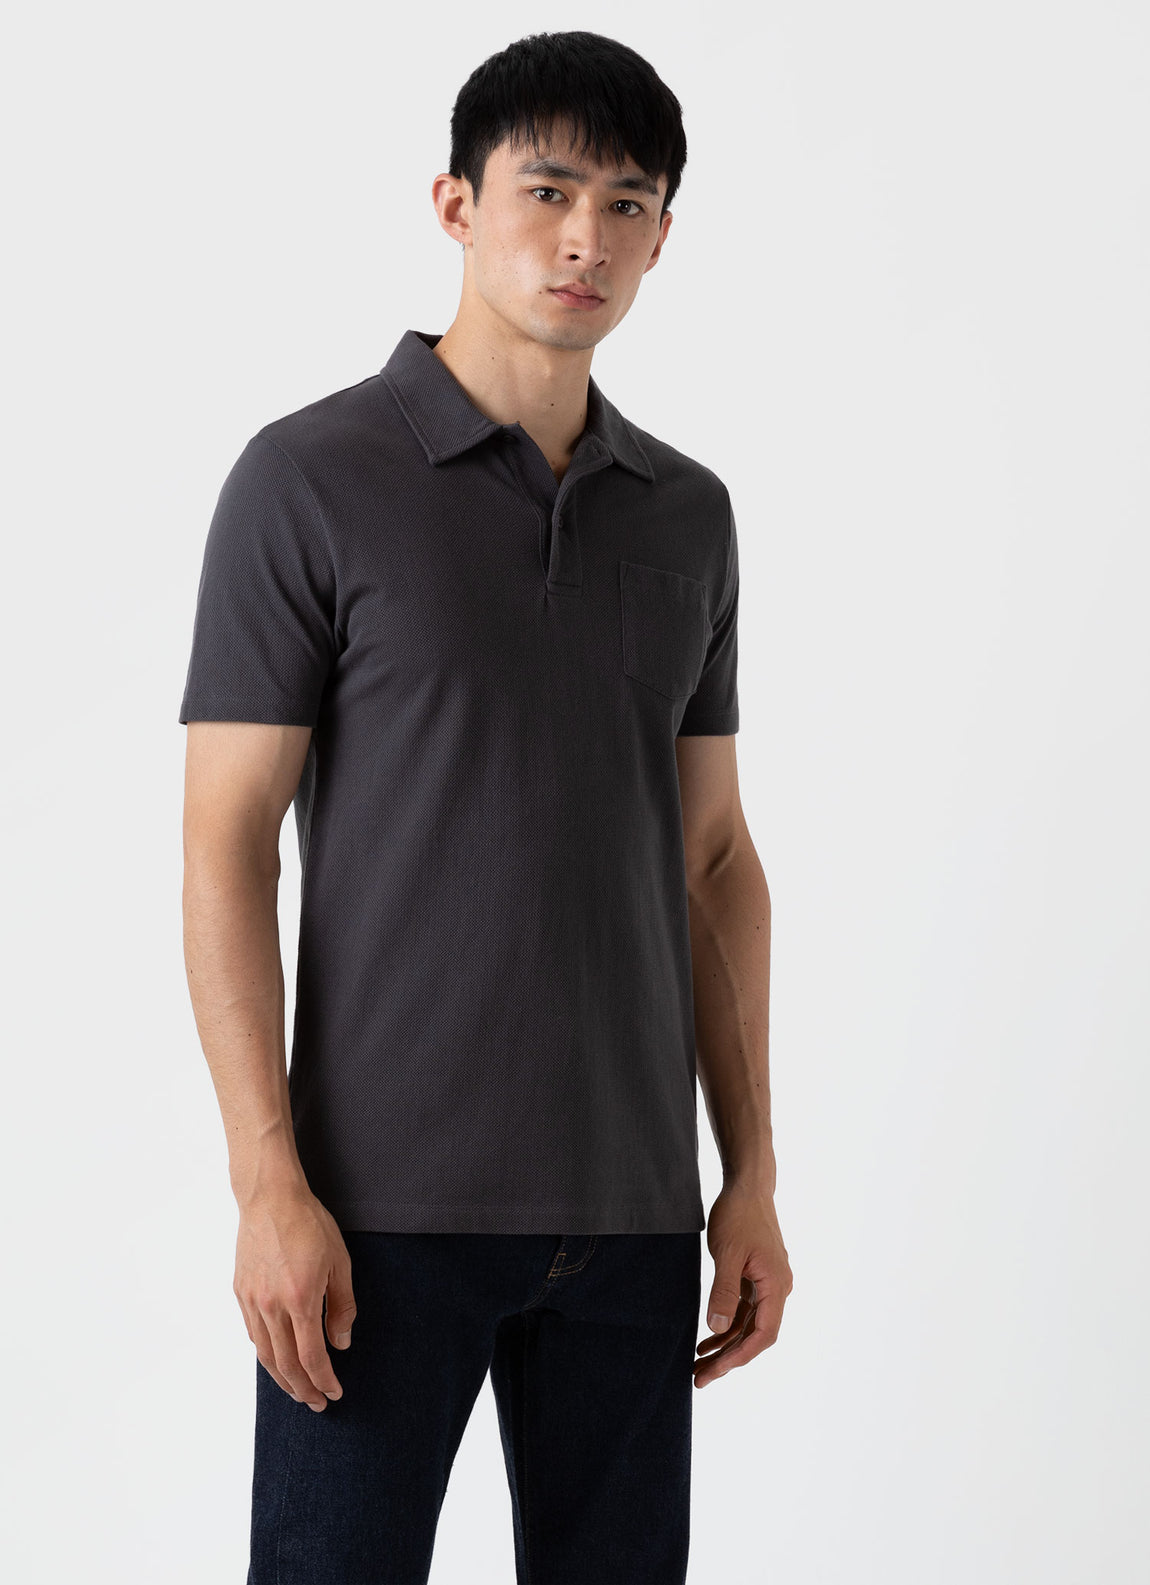 Men's Riviera Polo Shirt in Charcoal | Sunspel